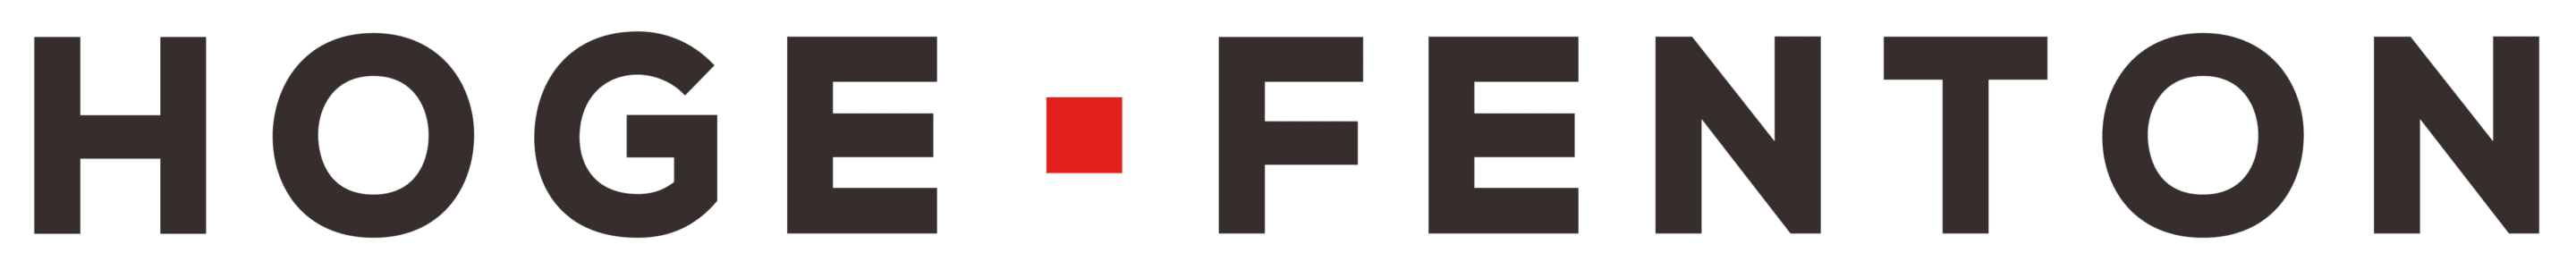 Hoge Fenton logo